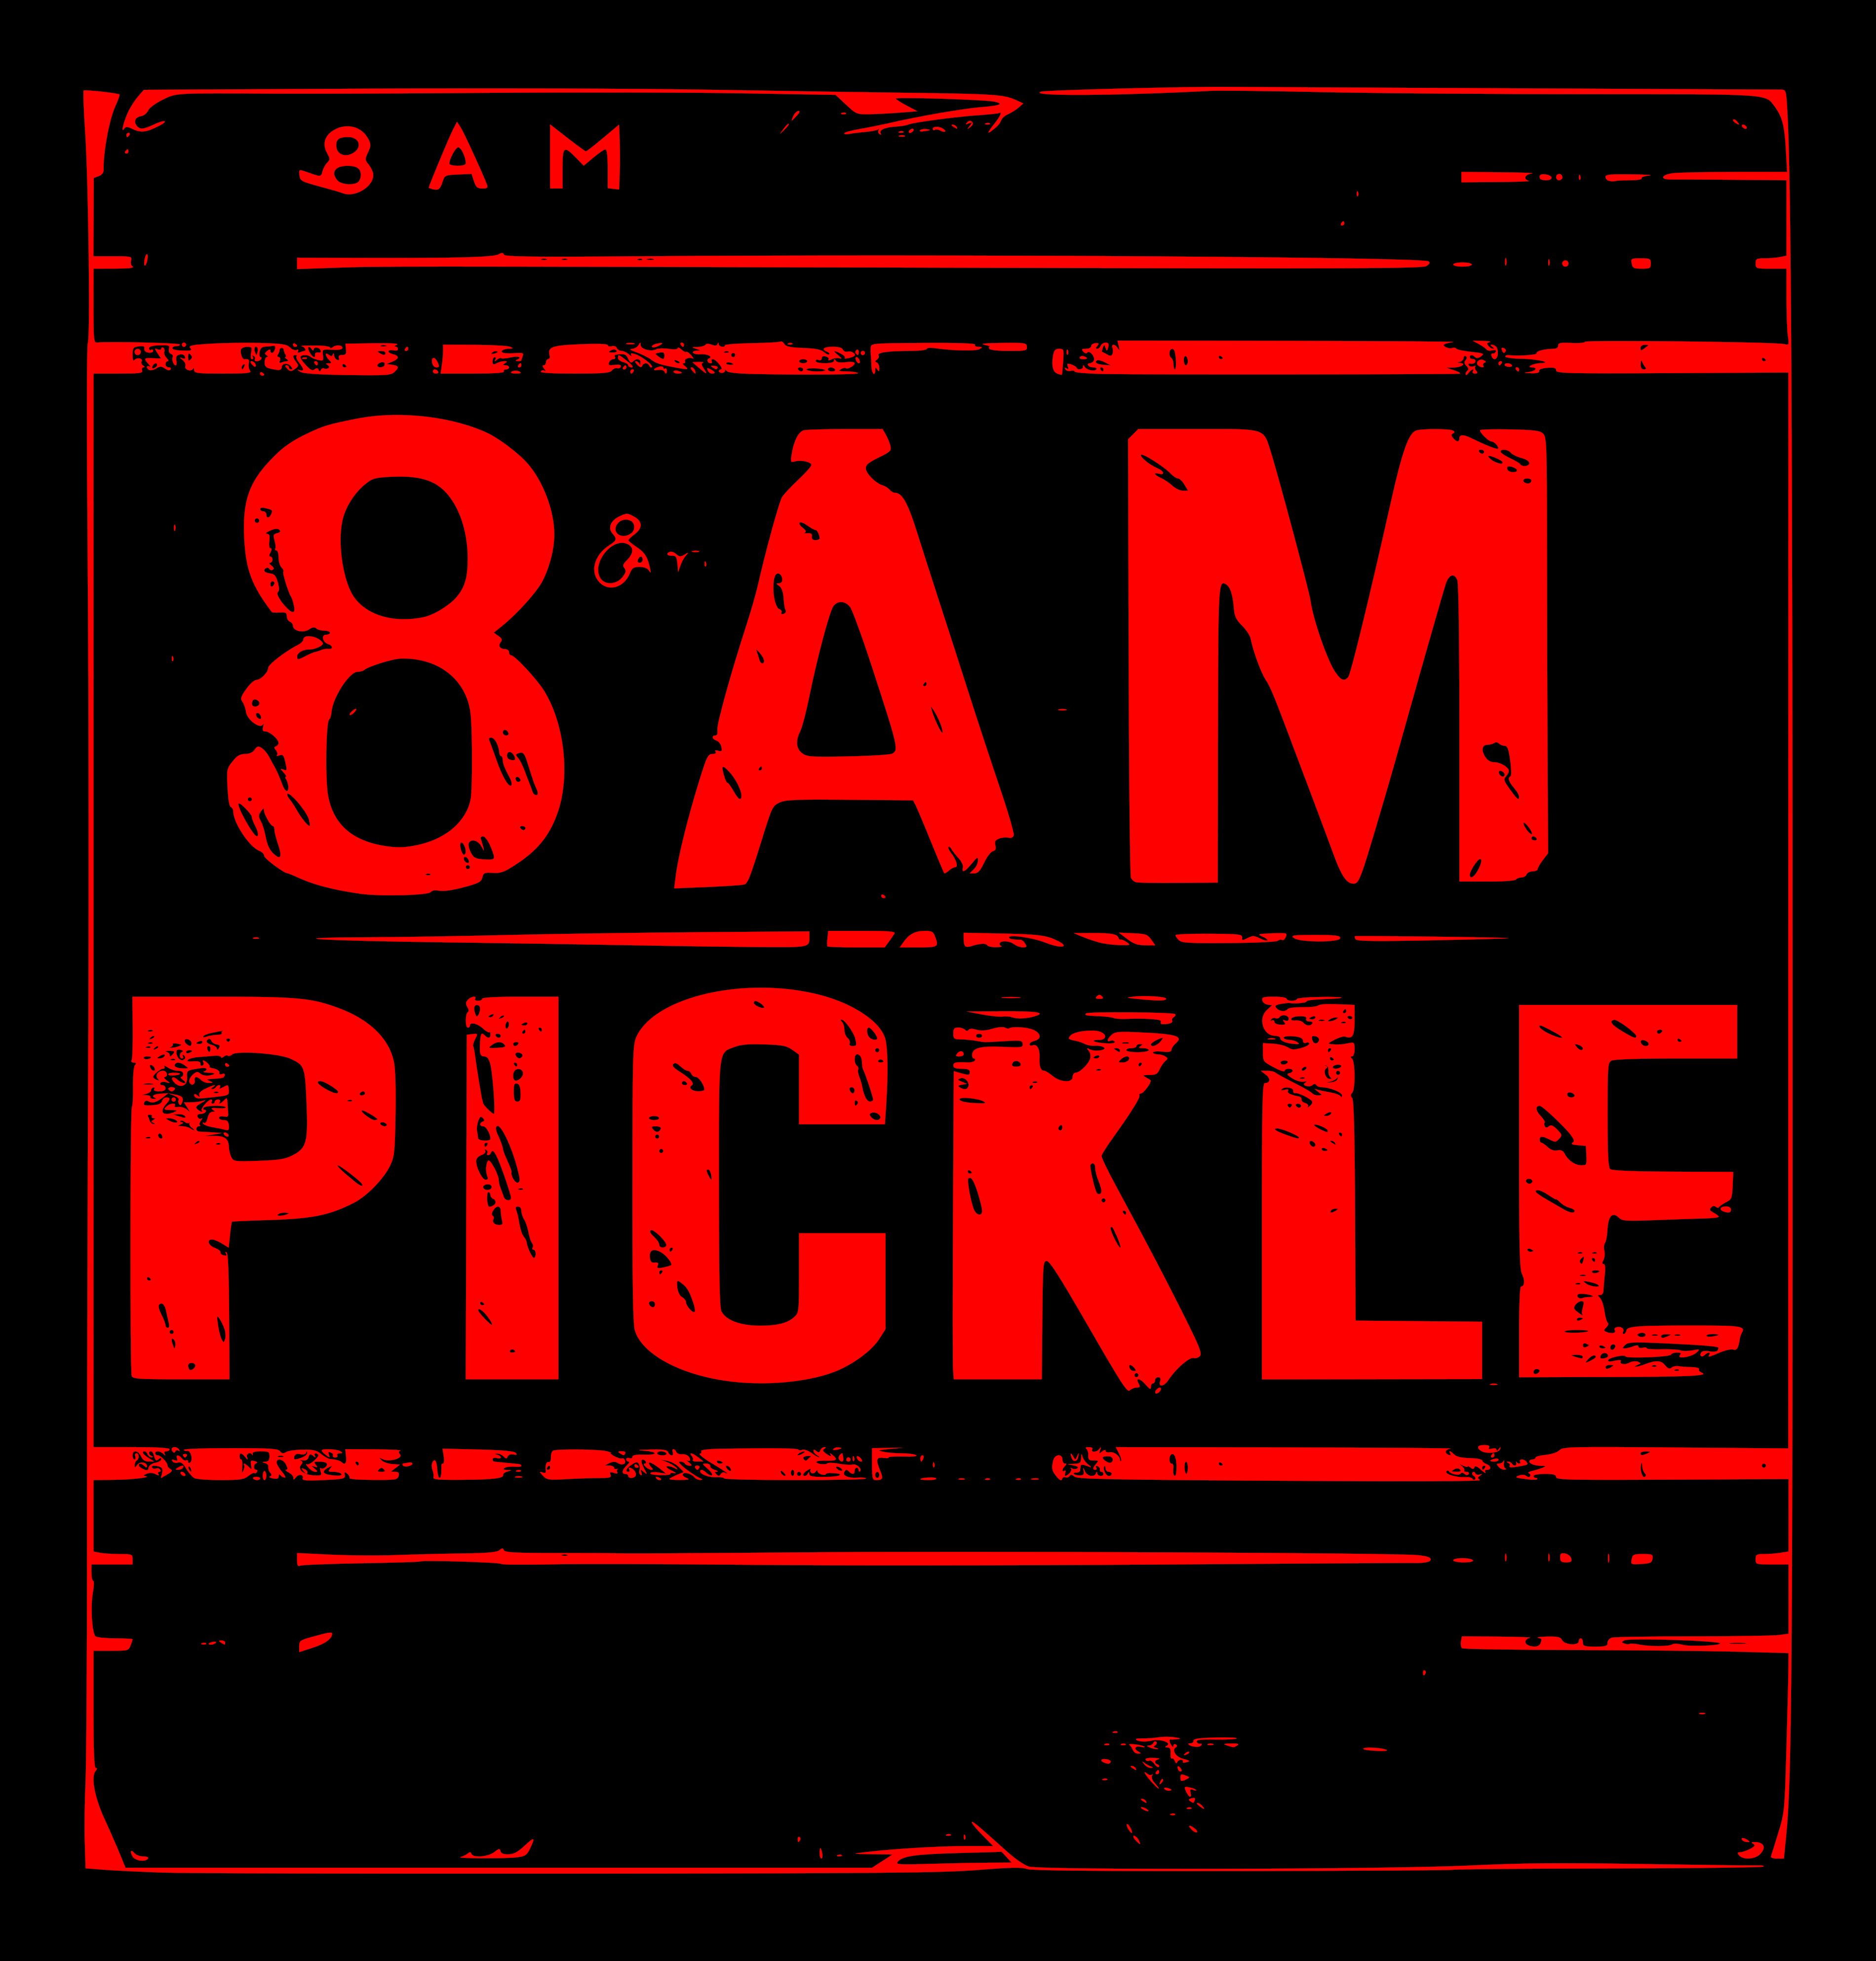 8AM Pickle Logo